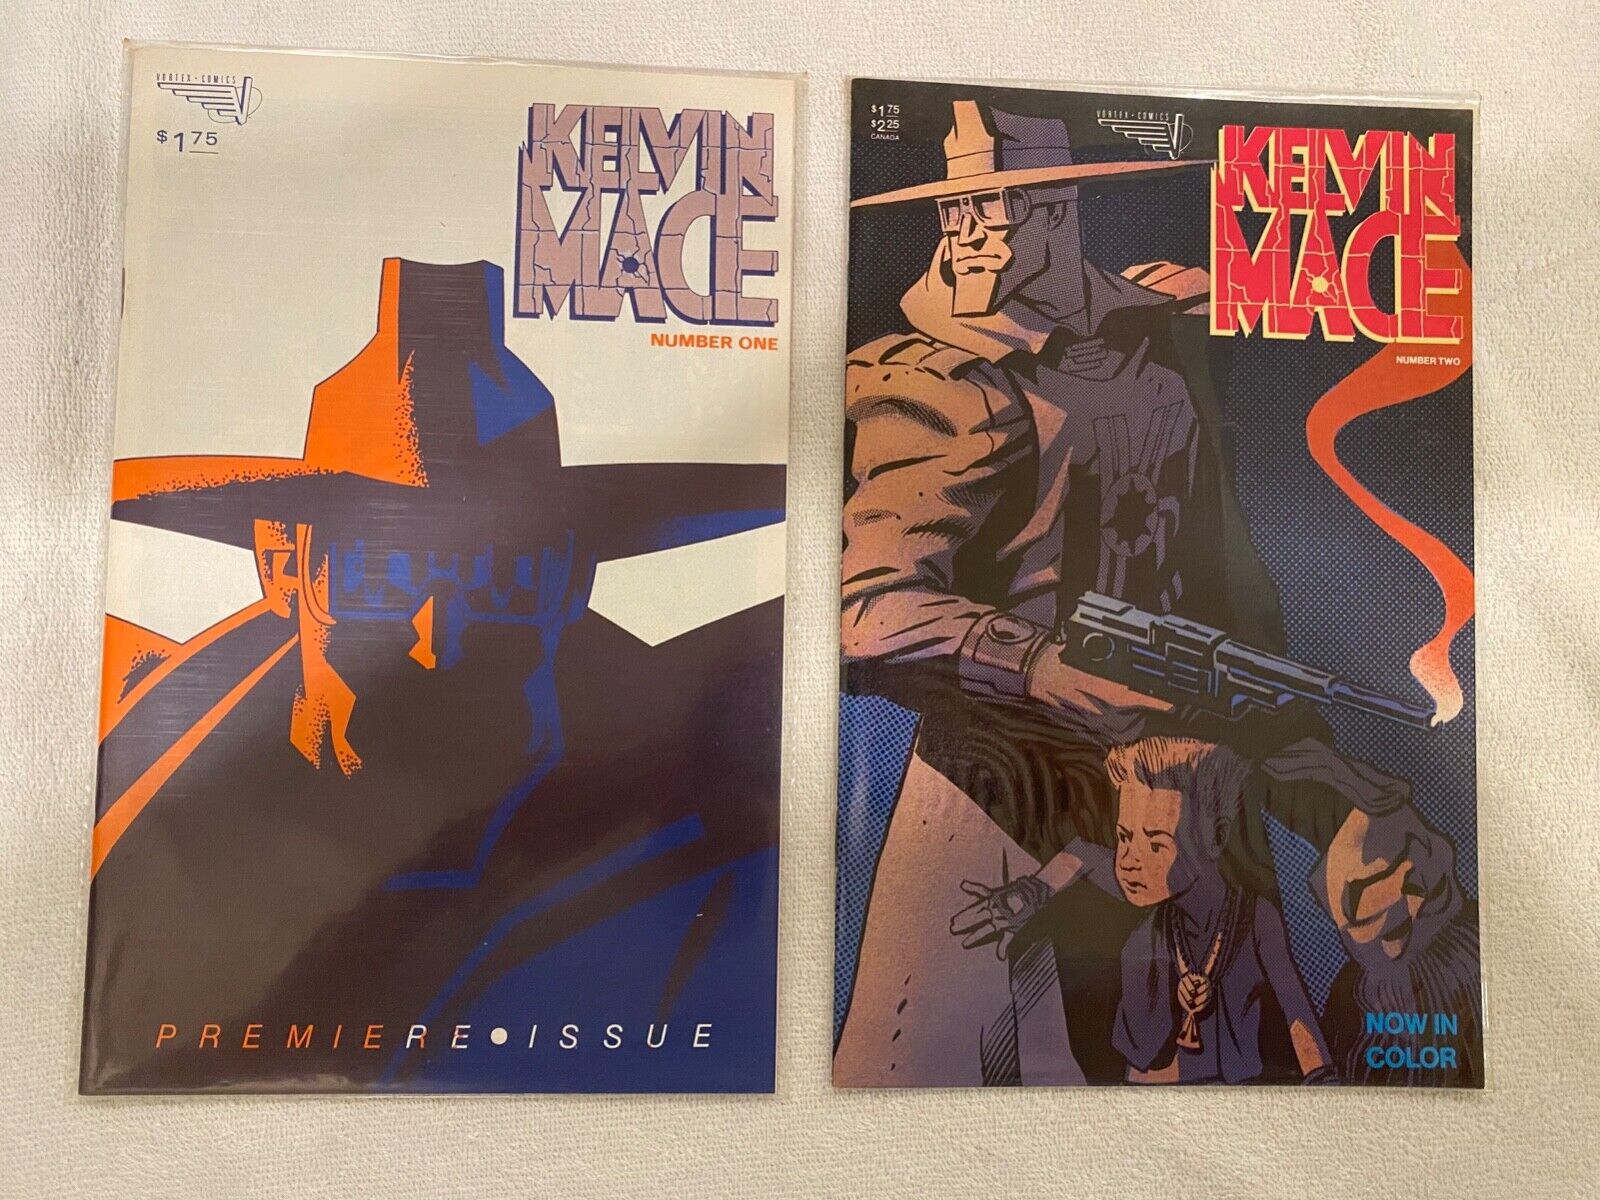 Kelvin Mace #1-2 (Complete Series); 1985 Vortex Comics, Klaus Schoenefeld comic